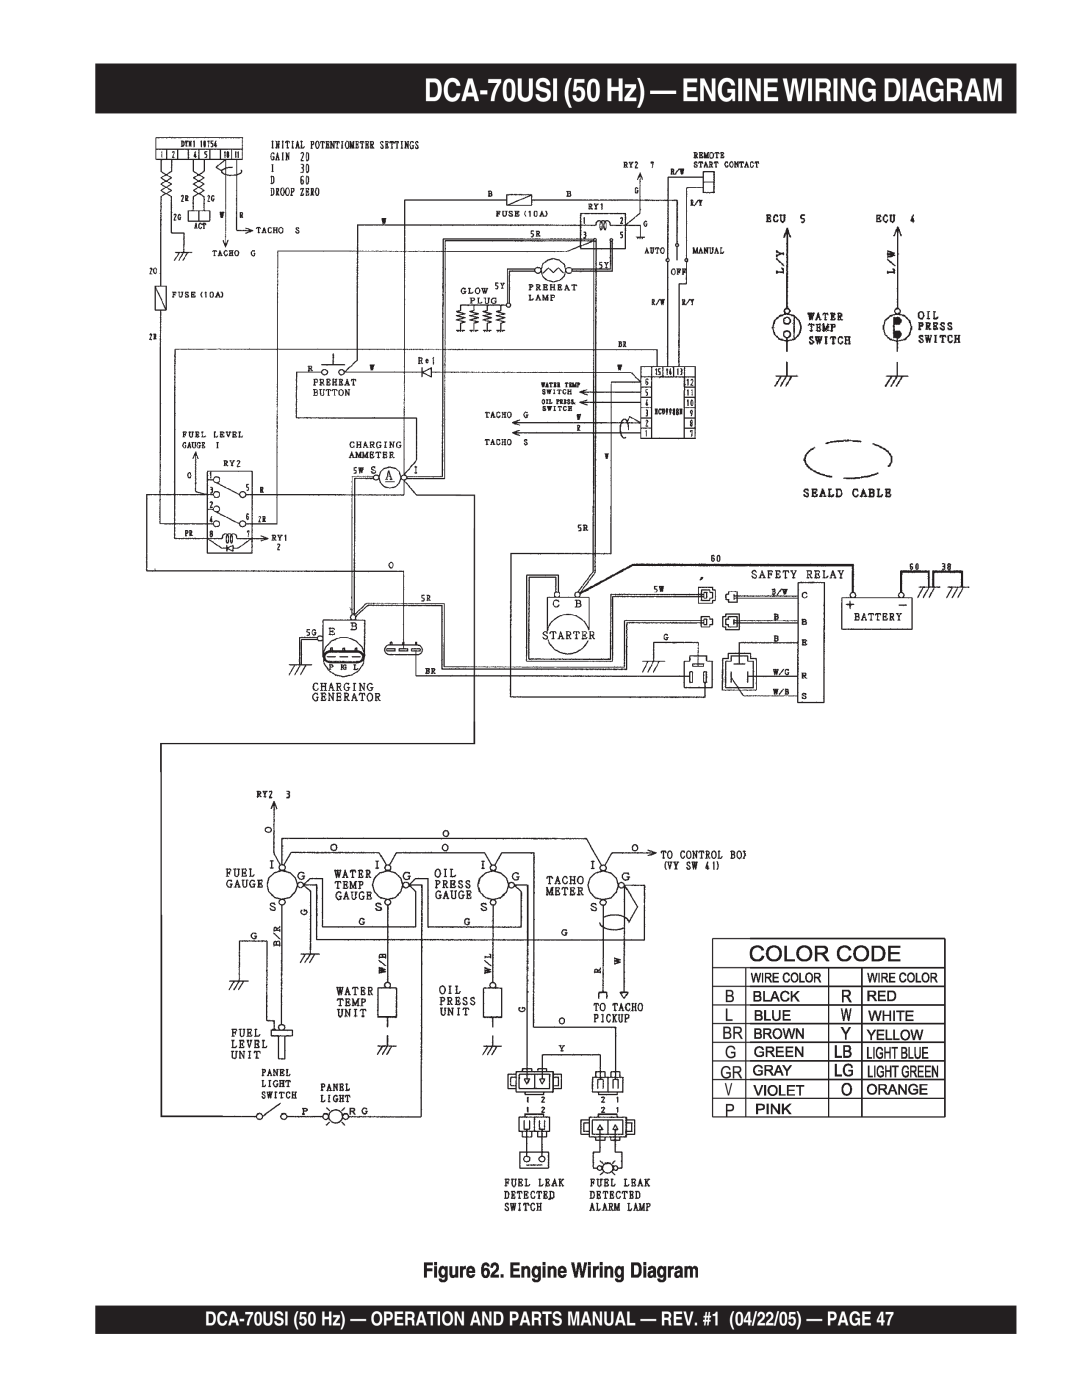 Multiquip operation manual DCA-70USI50 Hz — ENGINEWIRING DIAGRAM, Engine Wiring Diagram 